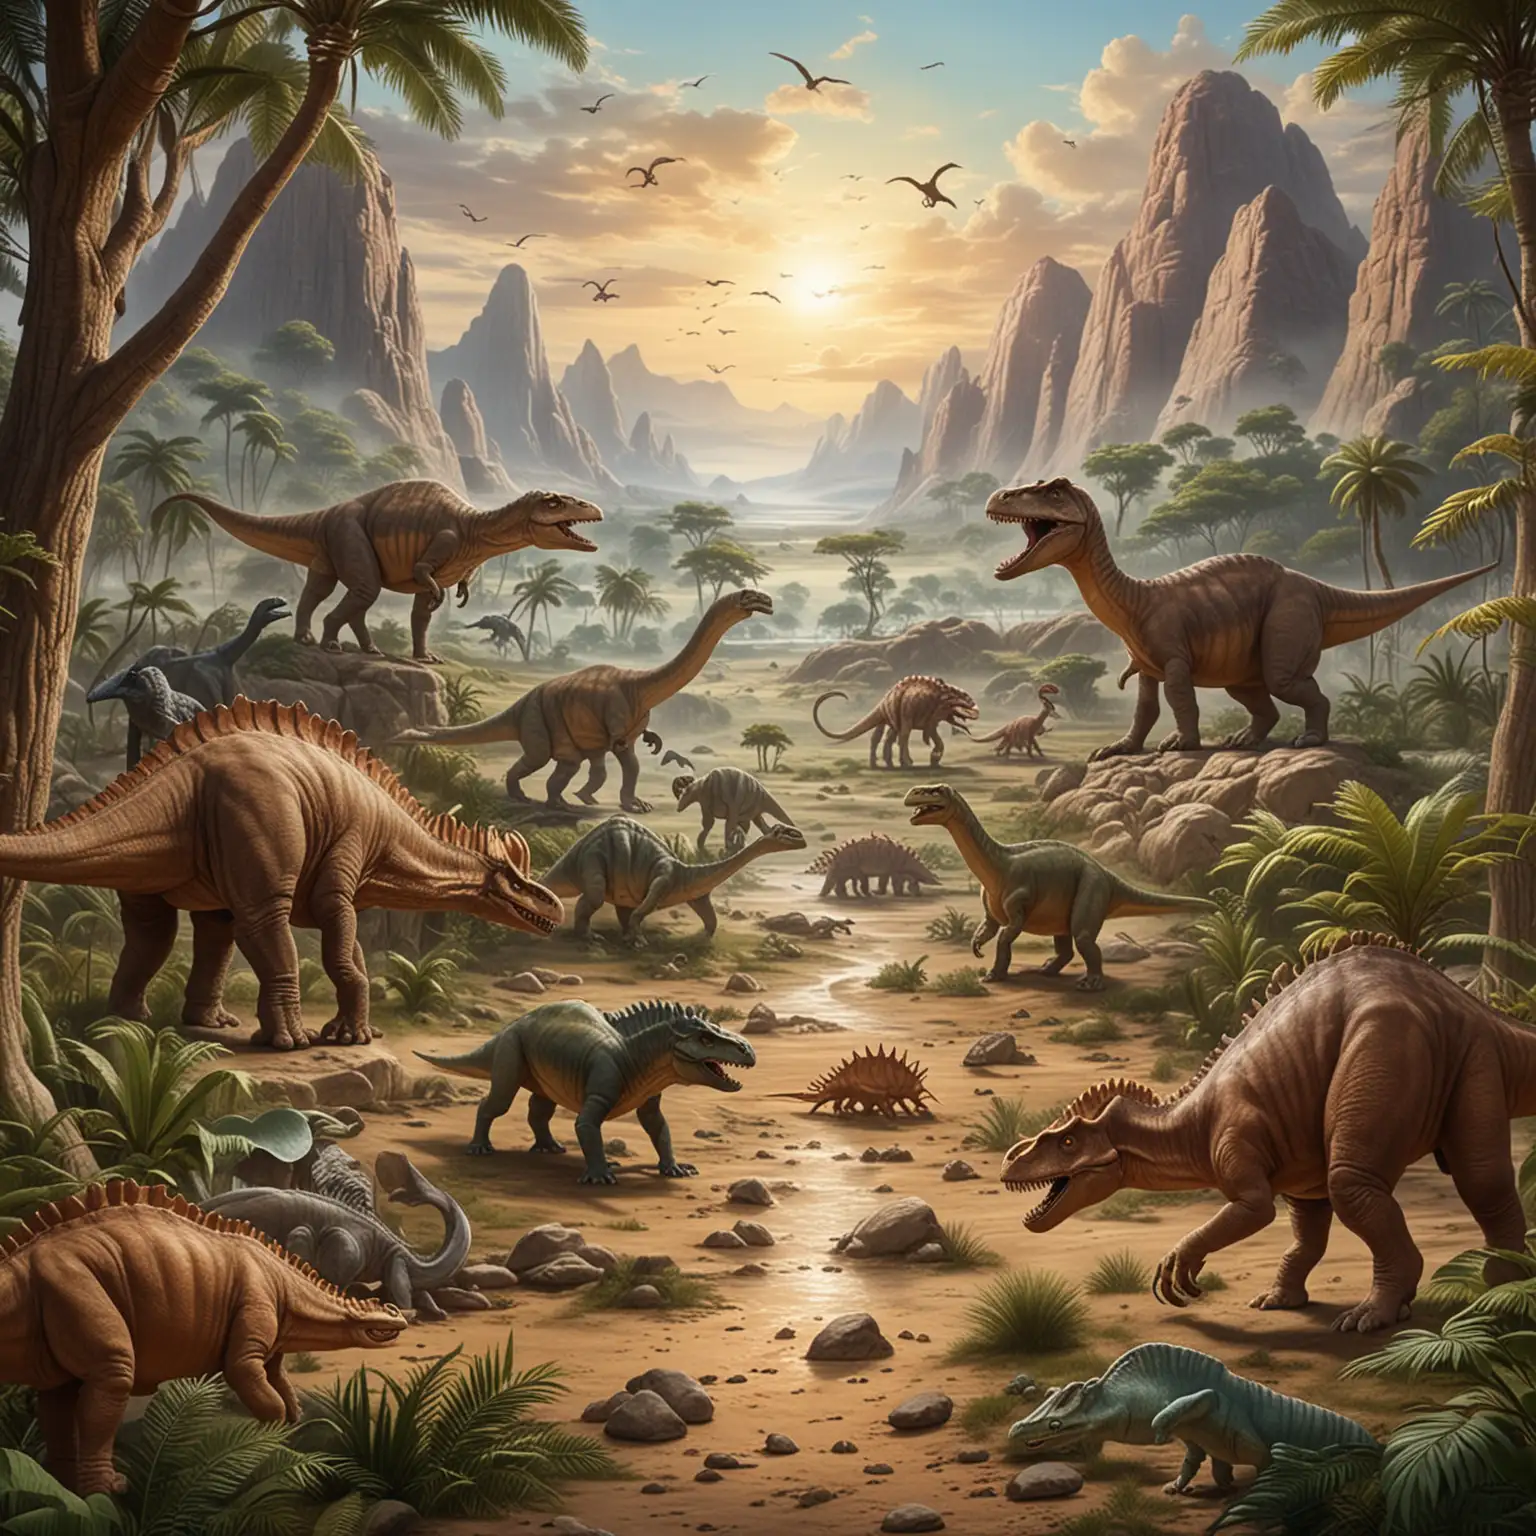 Prehistoric Scene with Diverse Dinosaurs